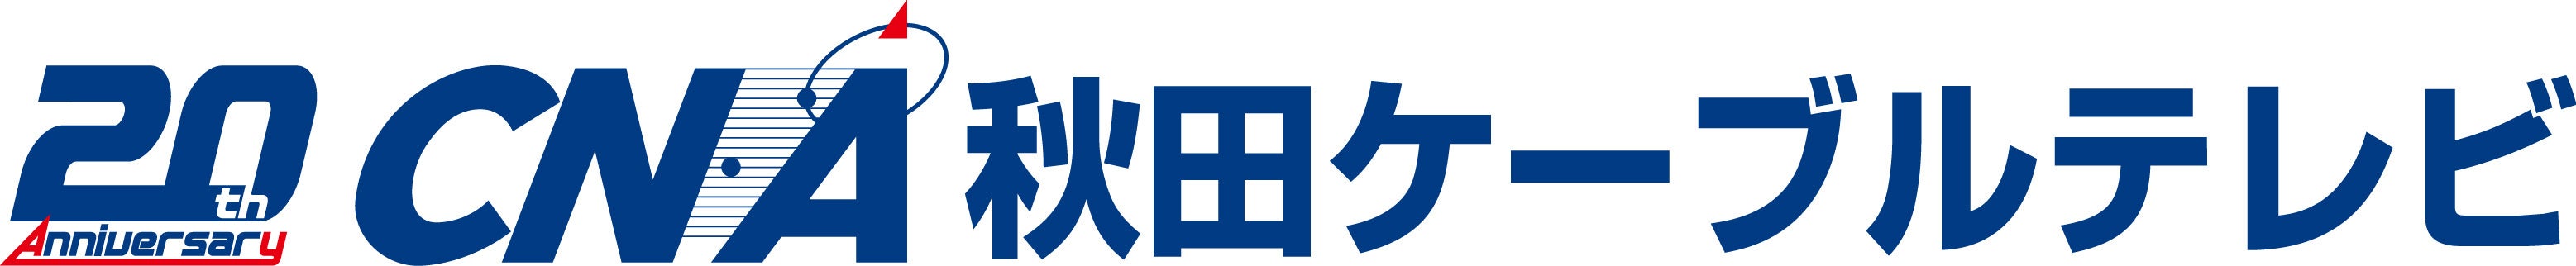 cna20th_logo.jpg